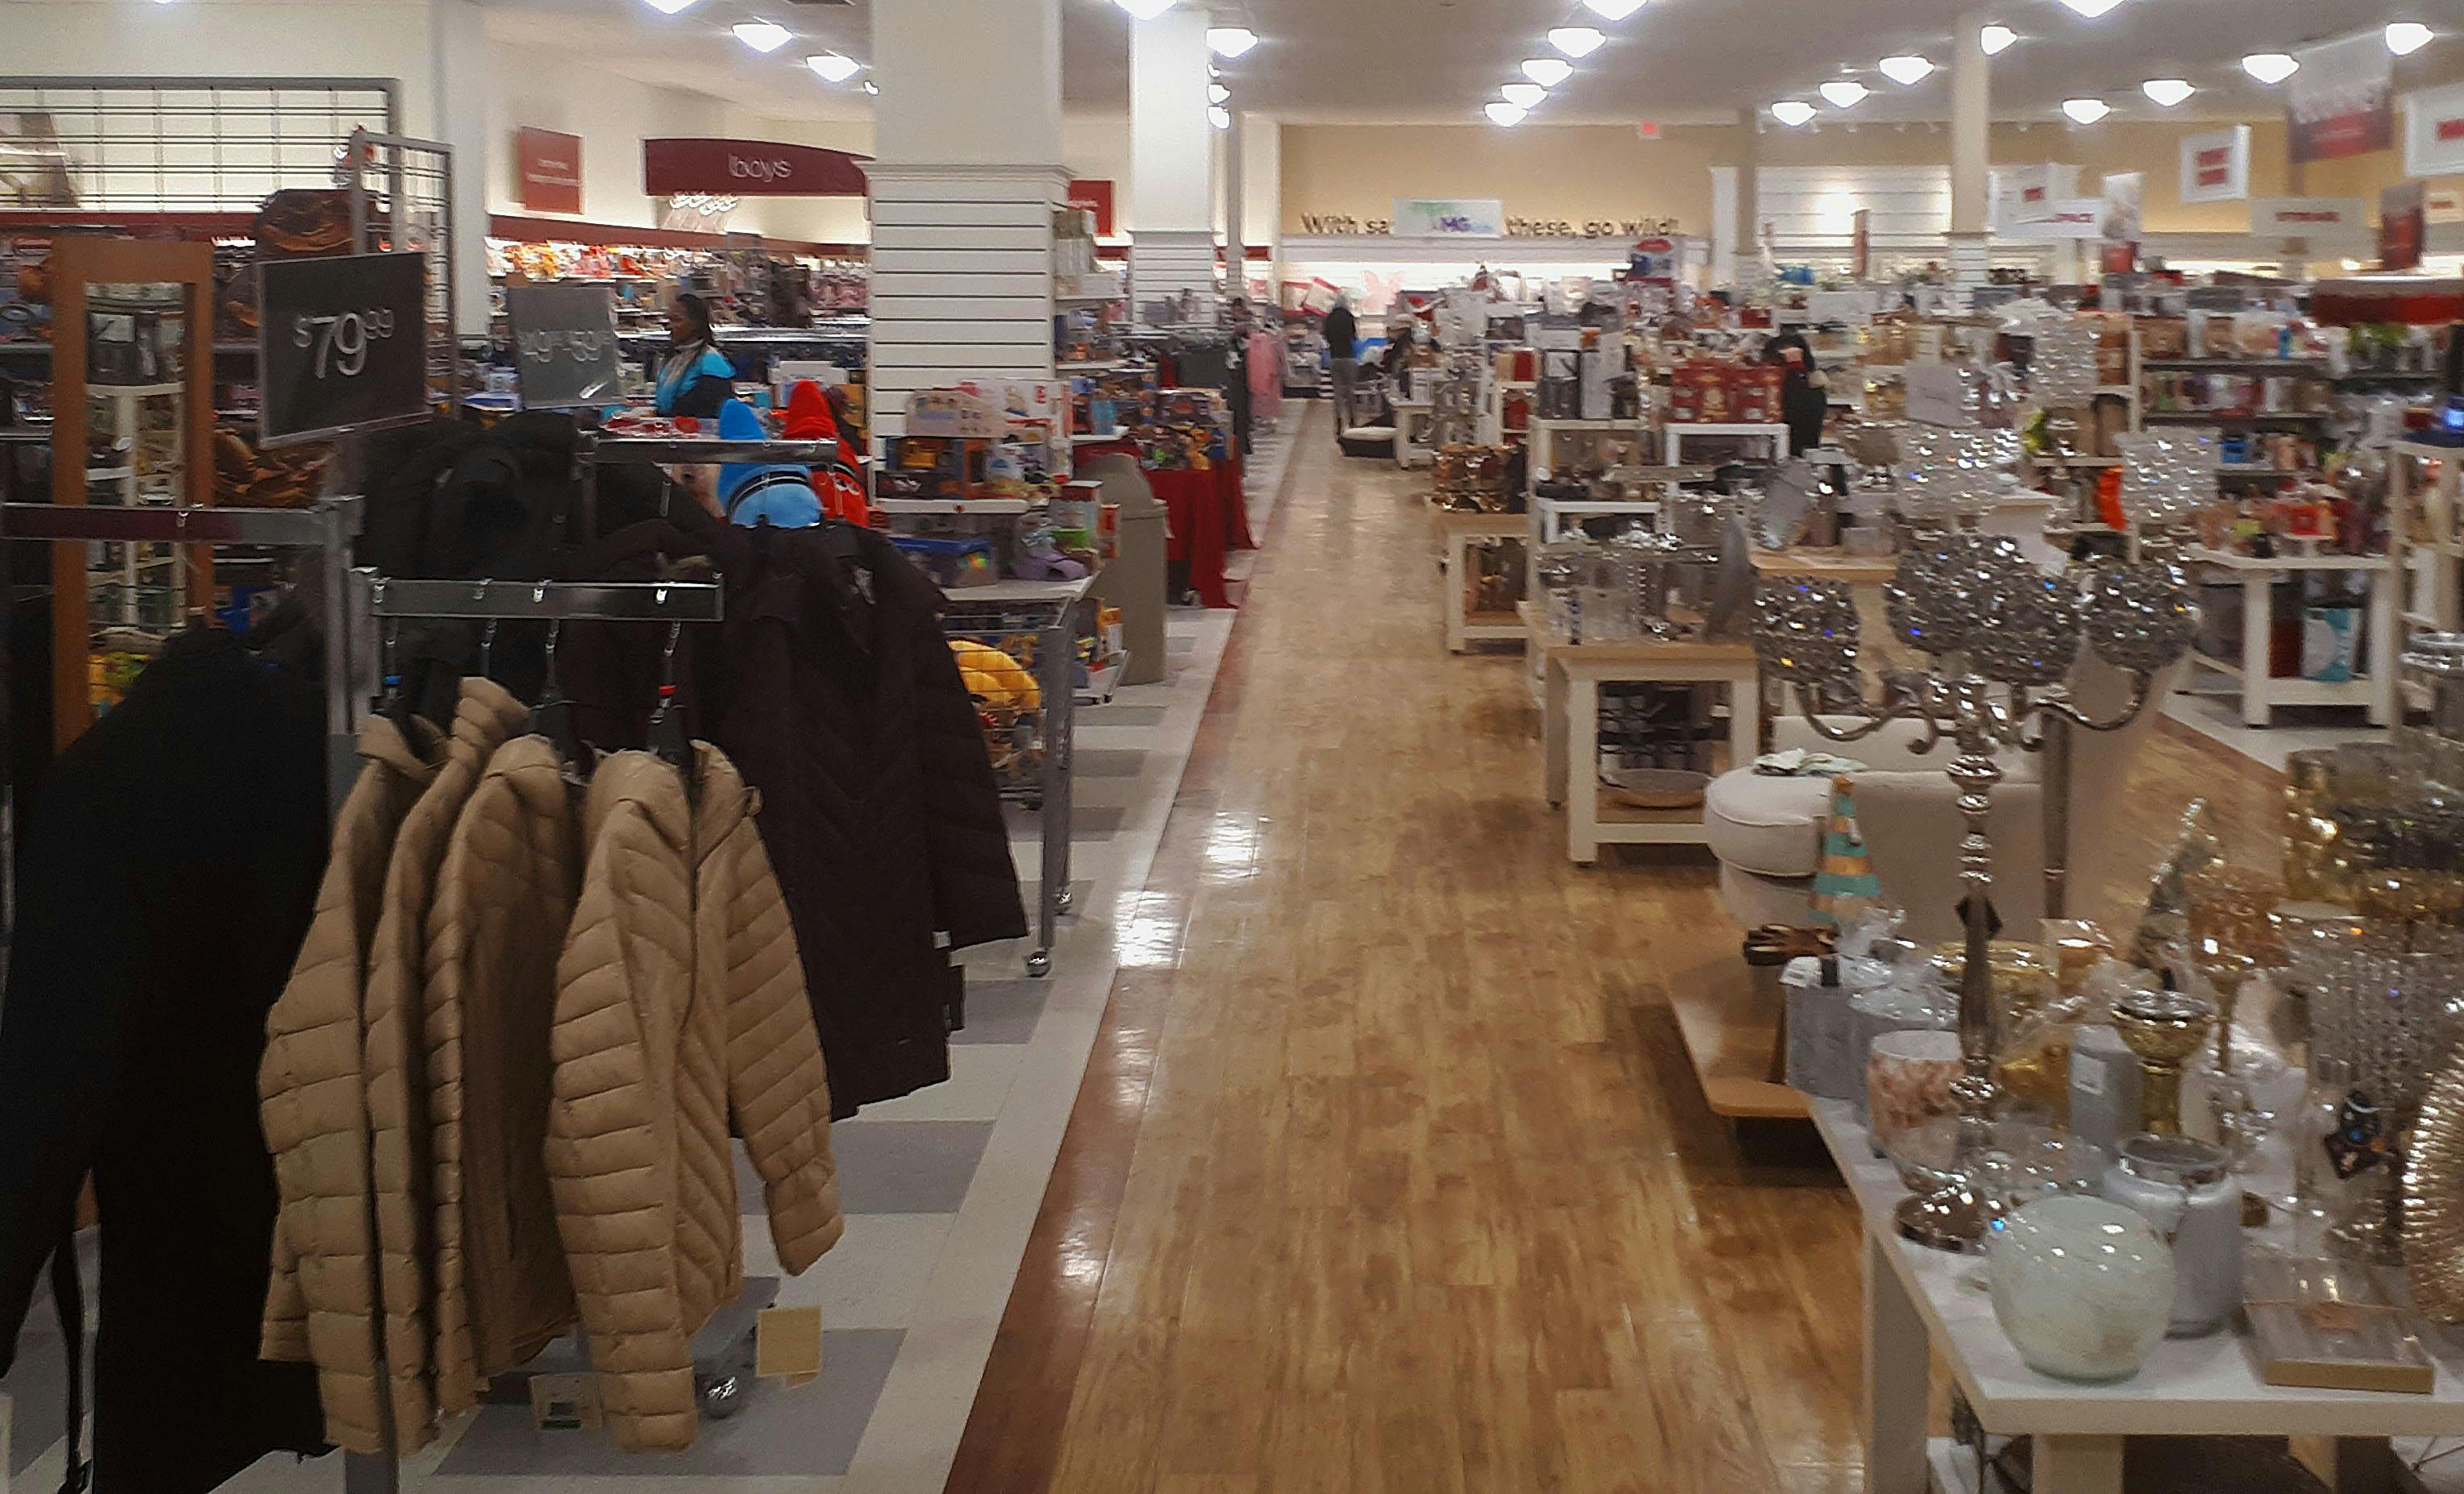  Free  stock photo of retail  store  retail  winter shopping